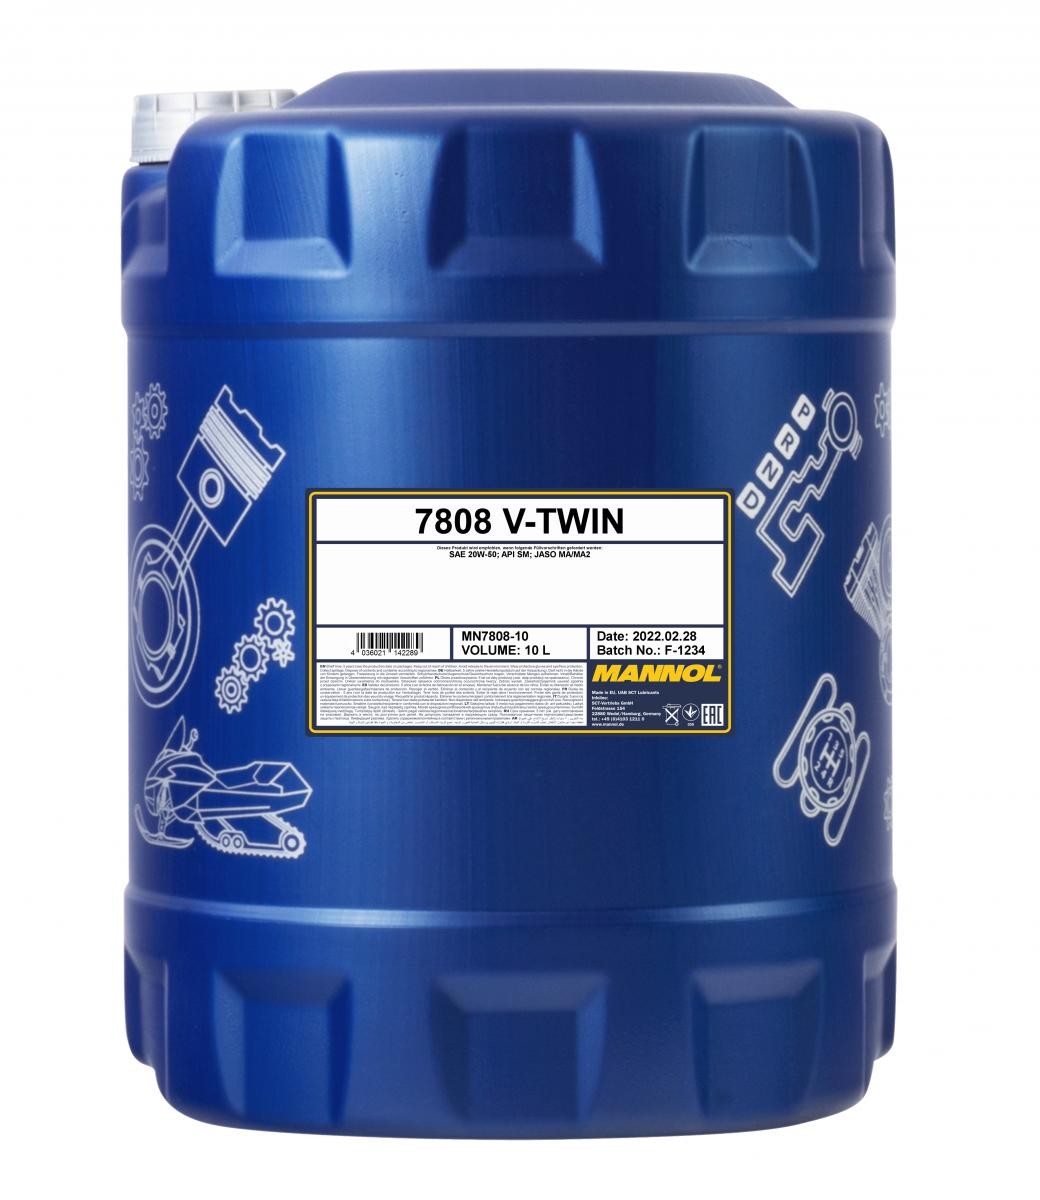 MANNOL V-TWIN 20W-50, 10l, Mineral Oil Motor oil MN7808-10 buy